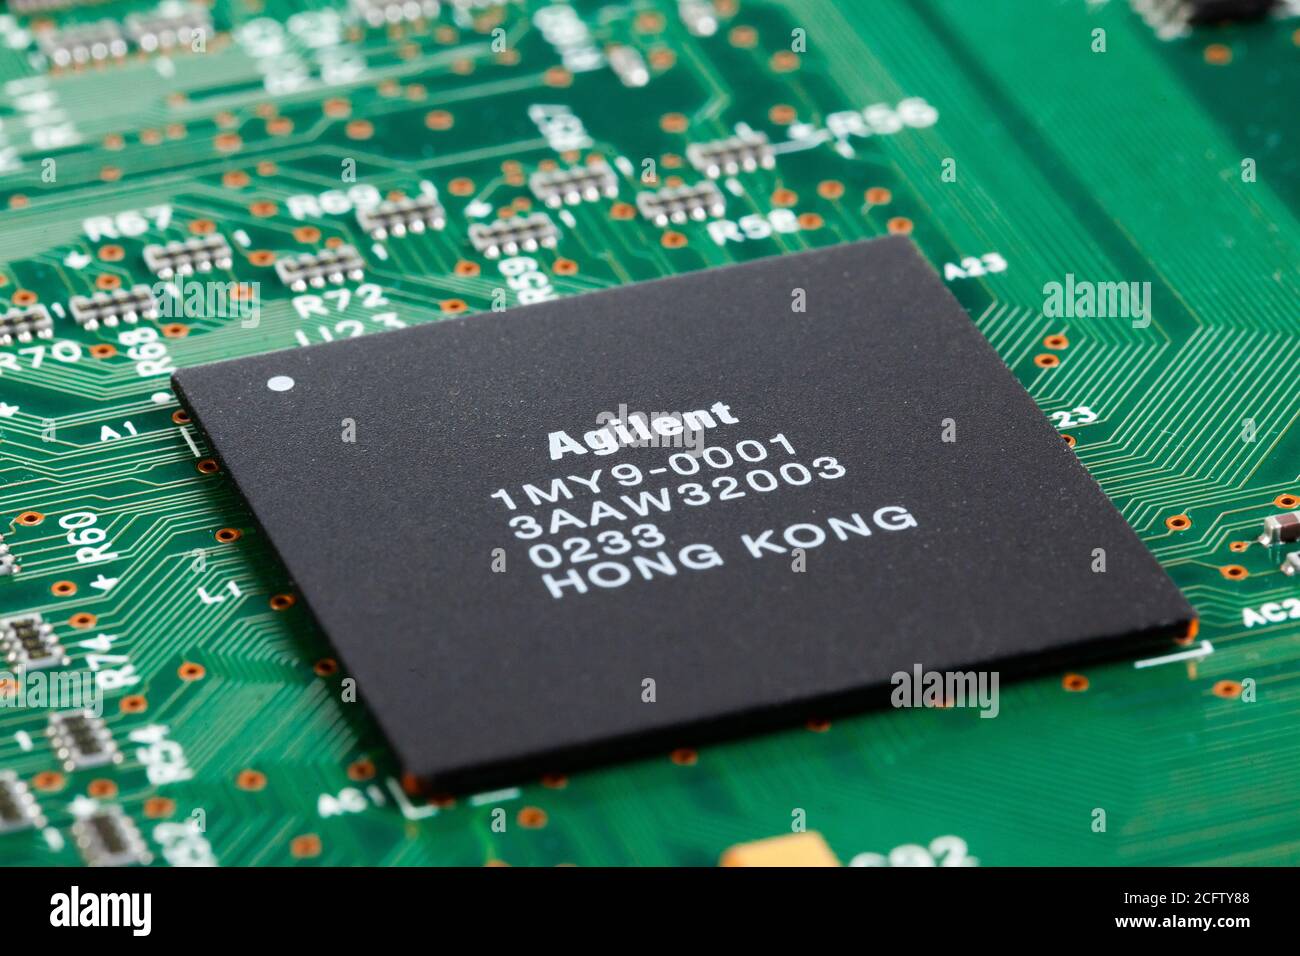 Agilent integrated circuit on board Stock Photo